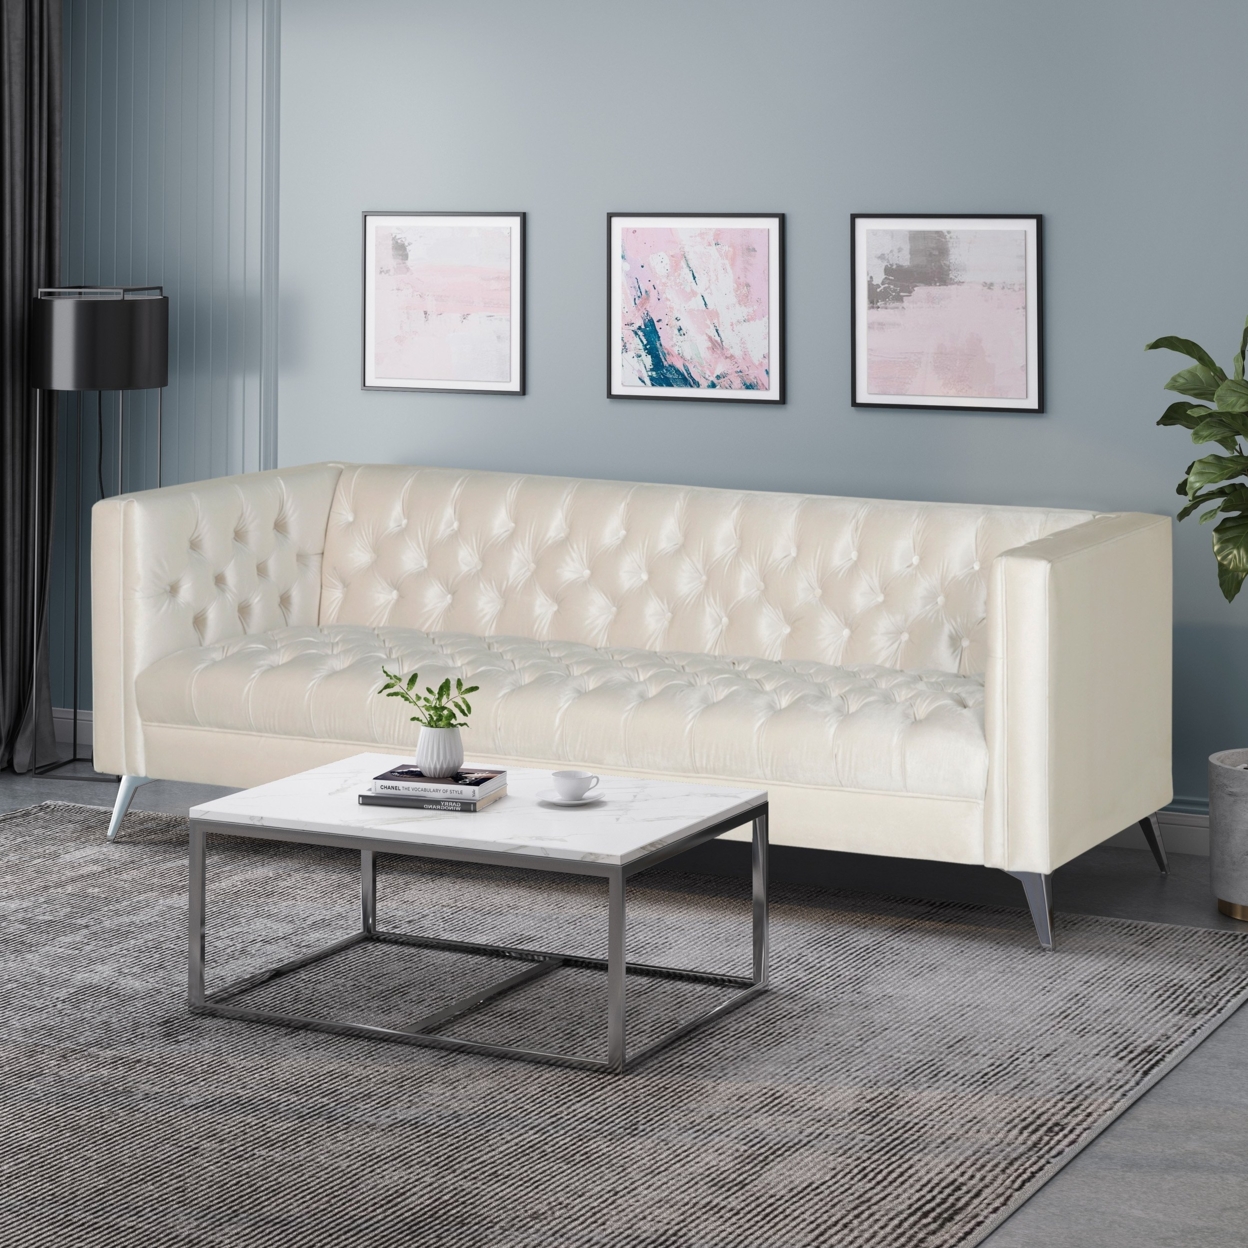 Harnoor Contemporary Tufted Velvet 3 Seater Sofa - Midnight Blue